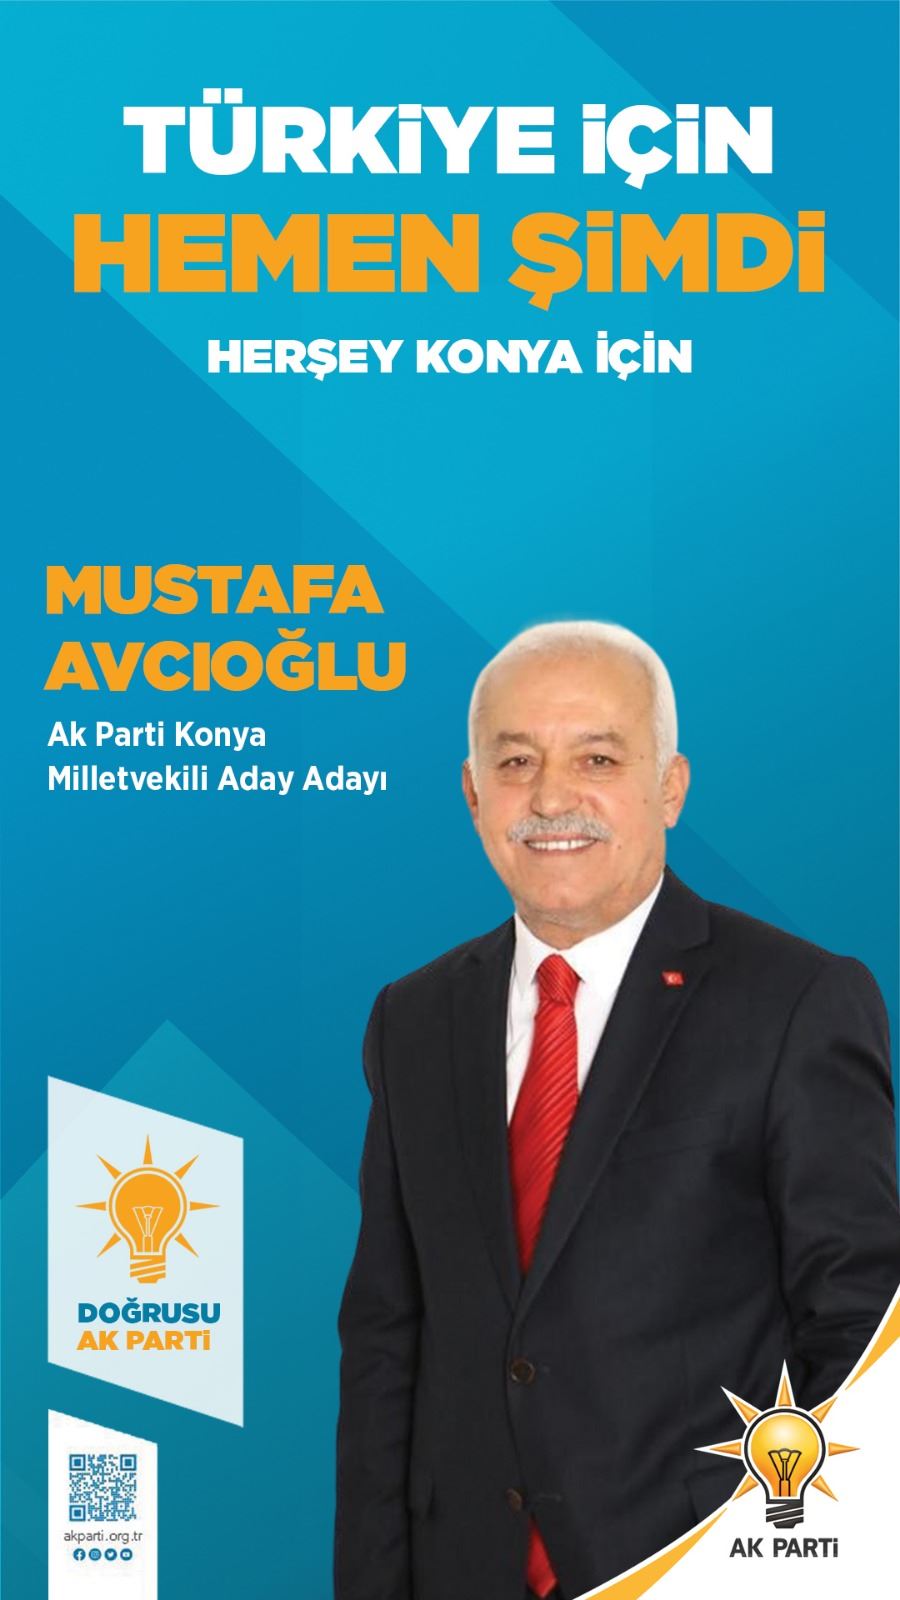 Mustafa Avcıoğlu AK Parti